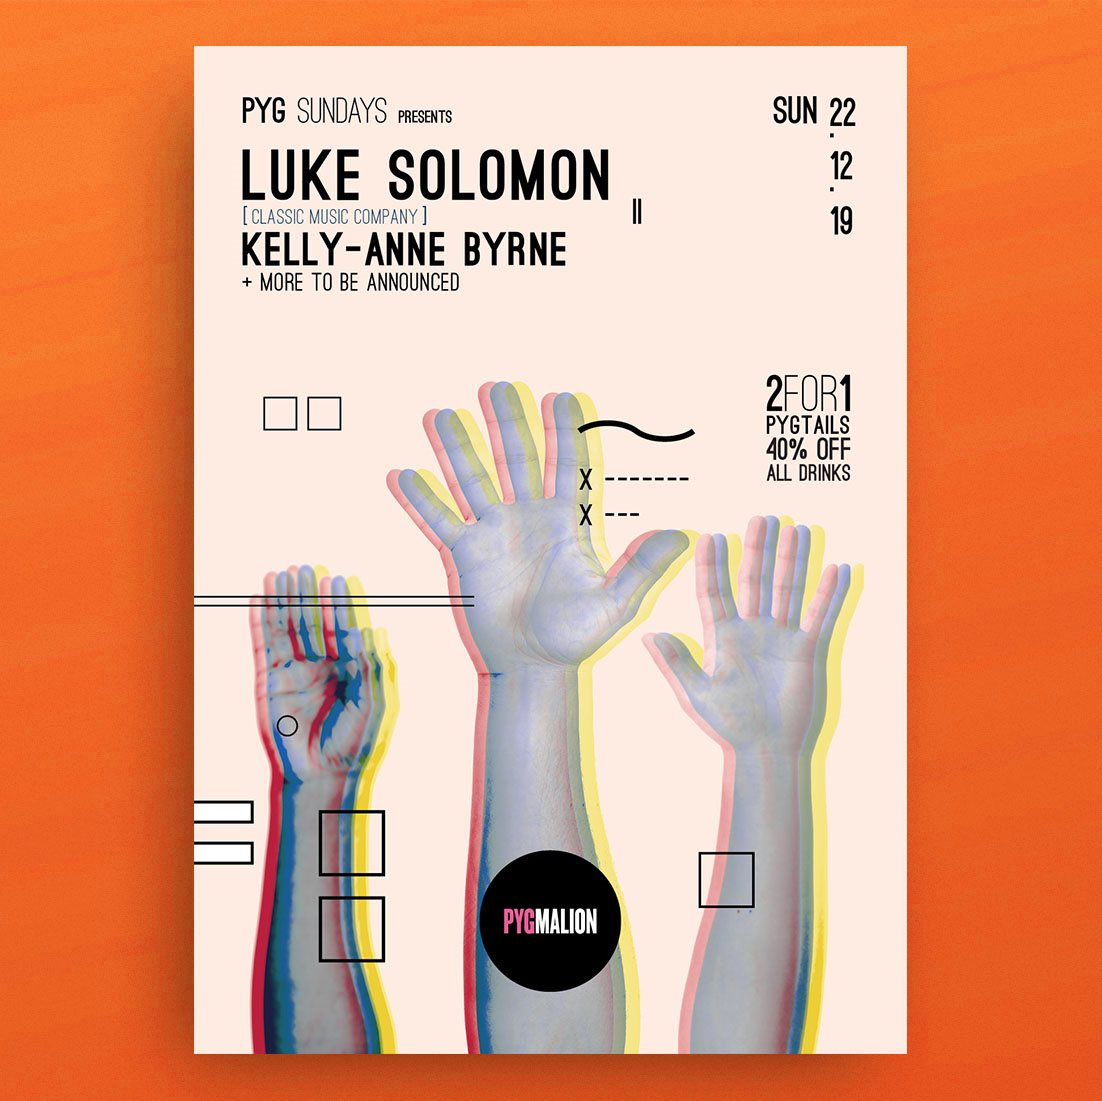 Pyg Sundays presents Luke Solomon - Flyer front